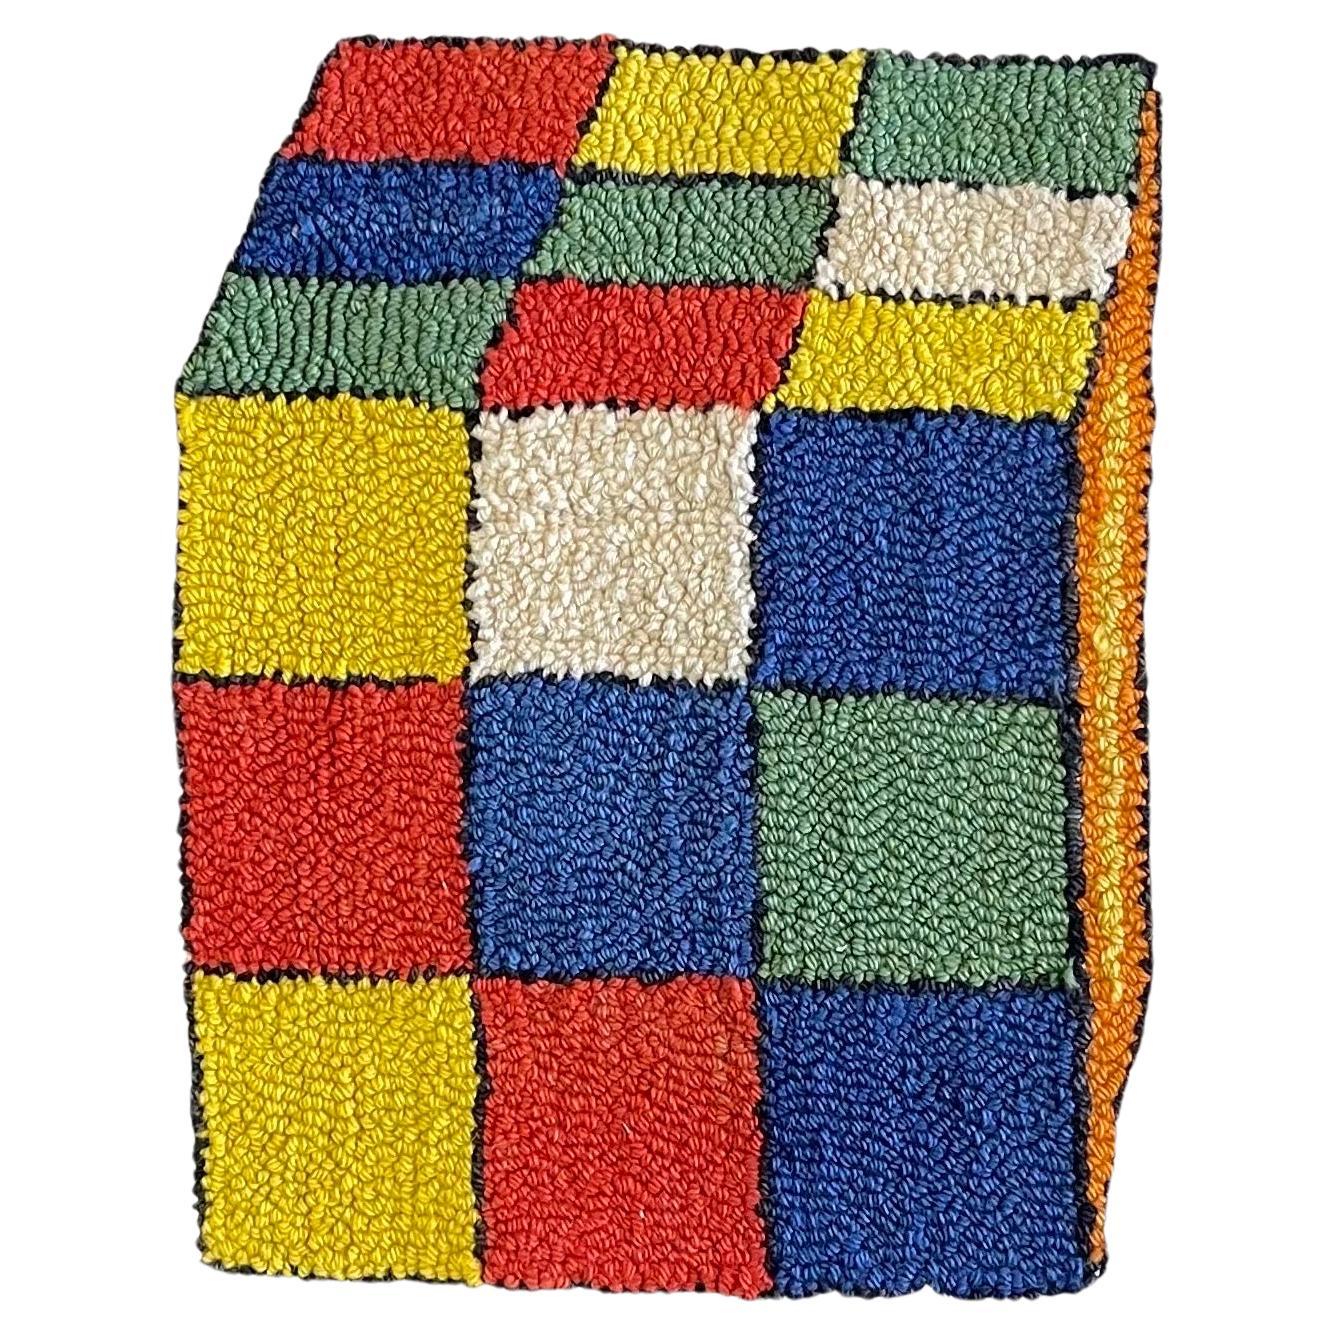 rubiks cube rug